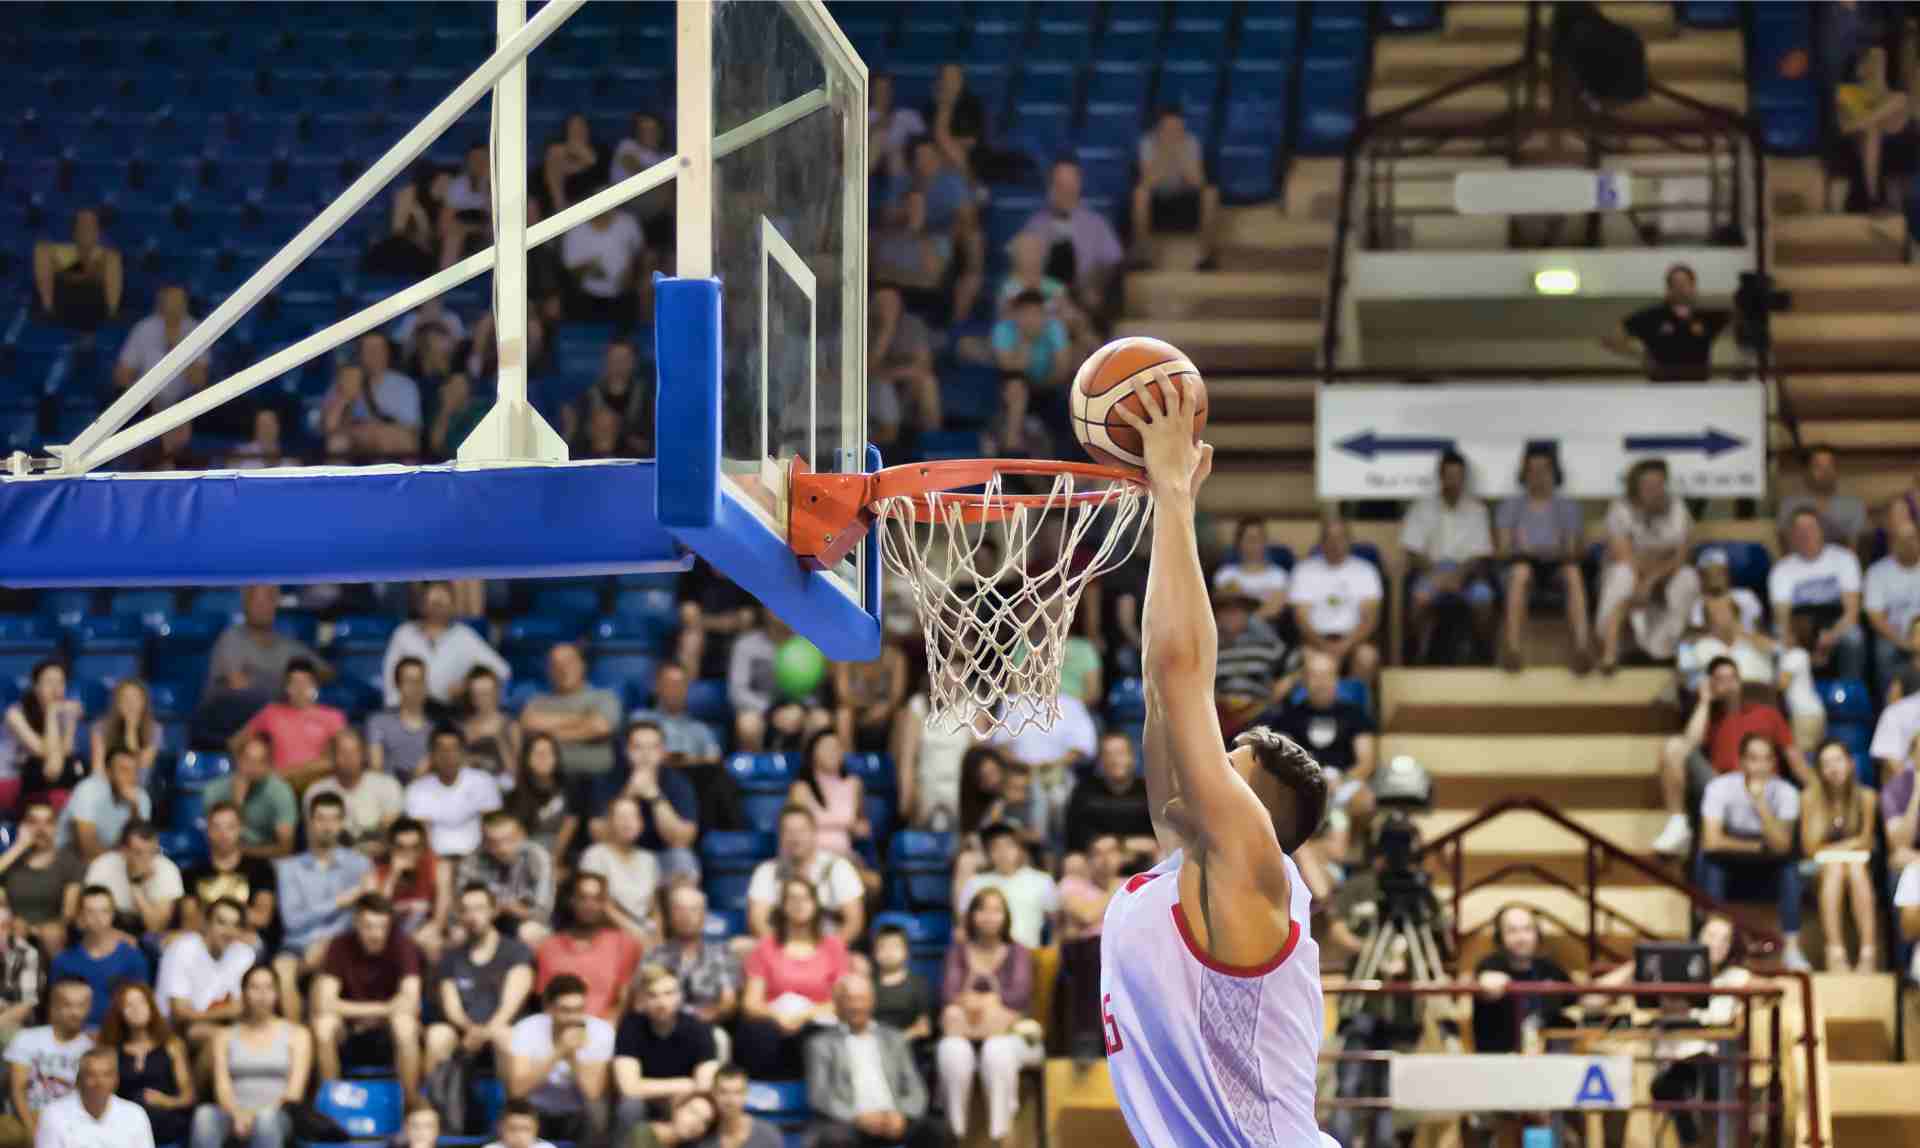 Player throws basketball into the basket